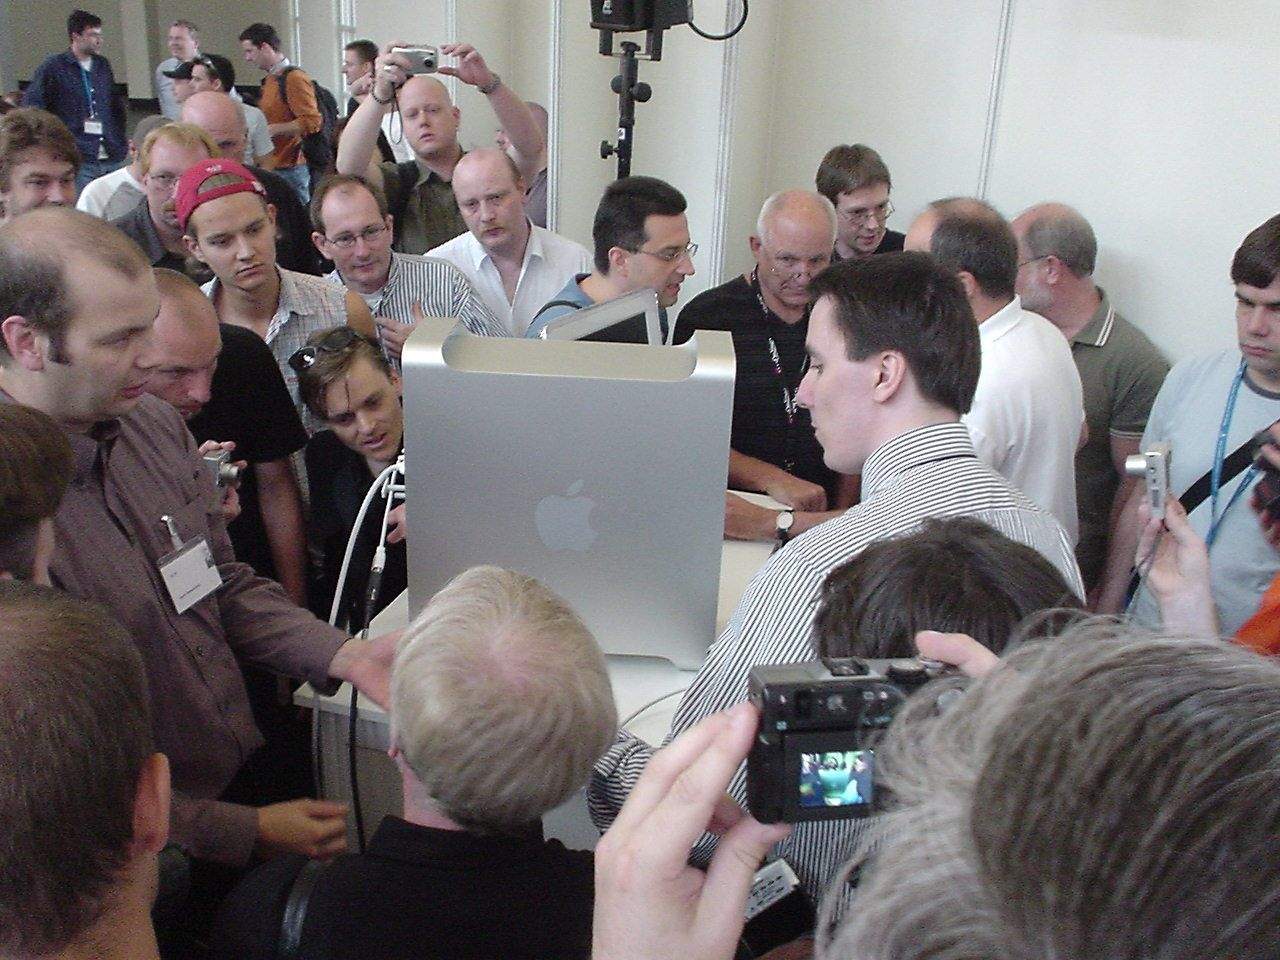 Crowds gather to admire the Power Mac G5 (https://www.rttm.de/G5/source/dsc00375.html)